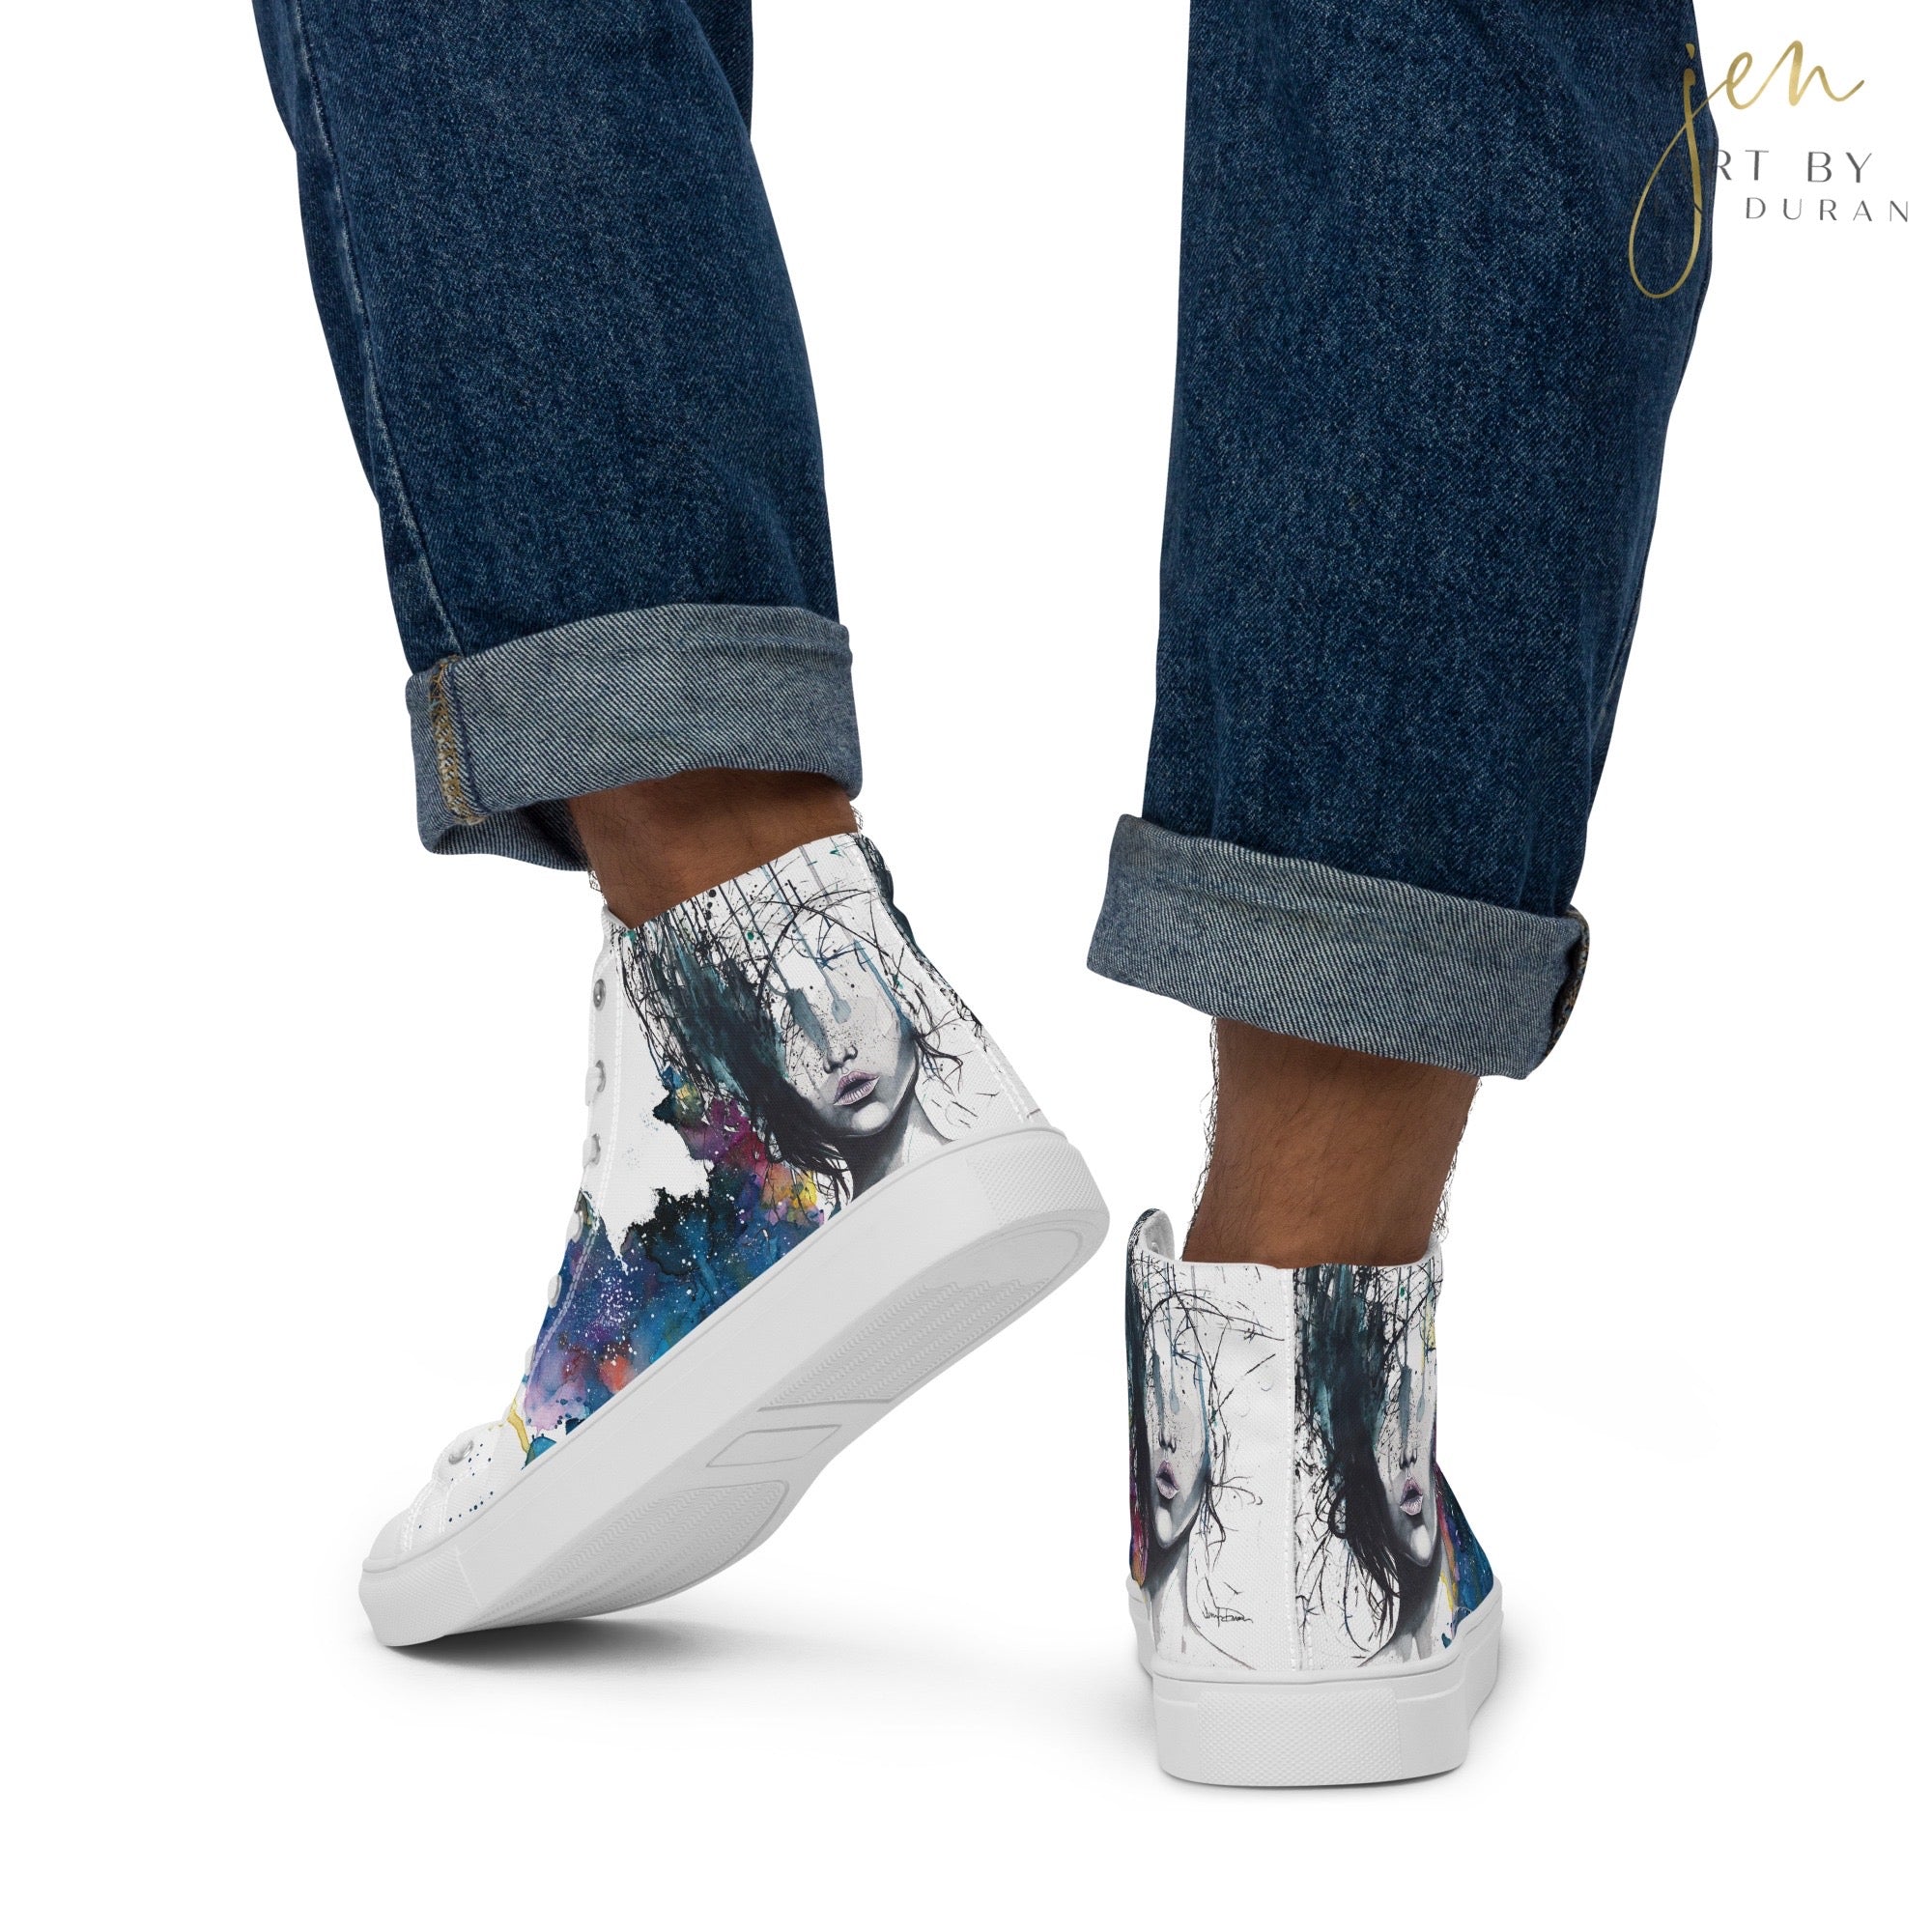 zhezhe luxury designer men's casual shoes| Alibaba.com